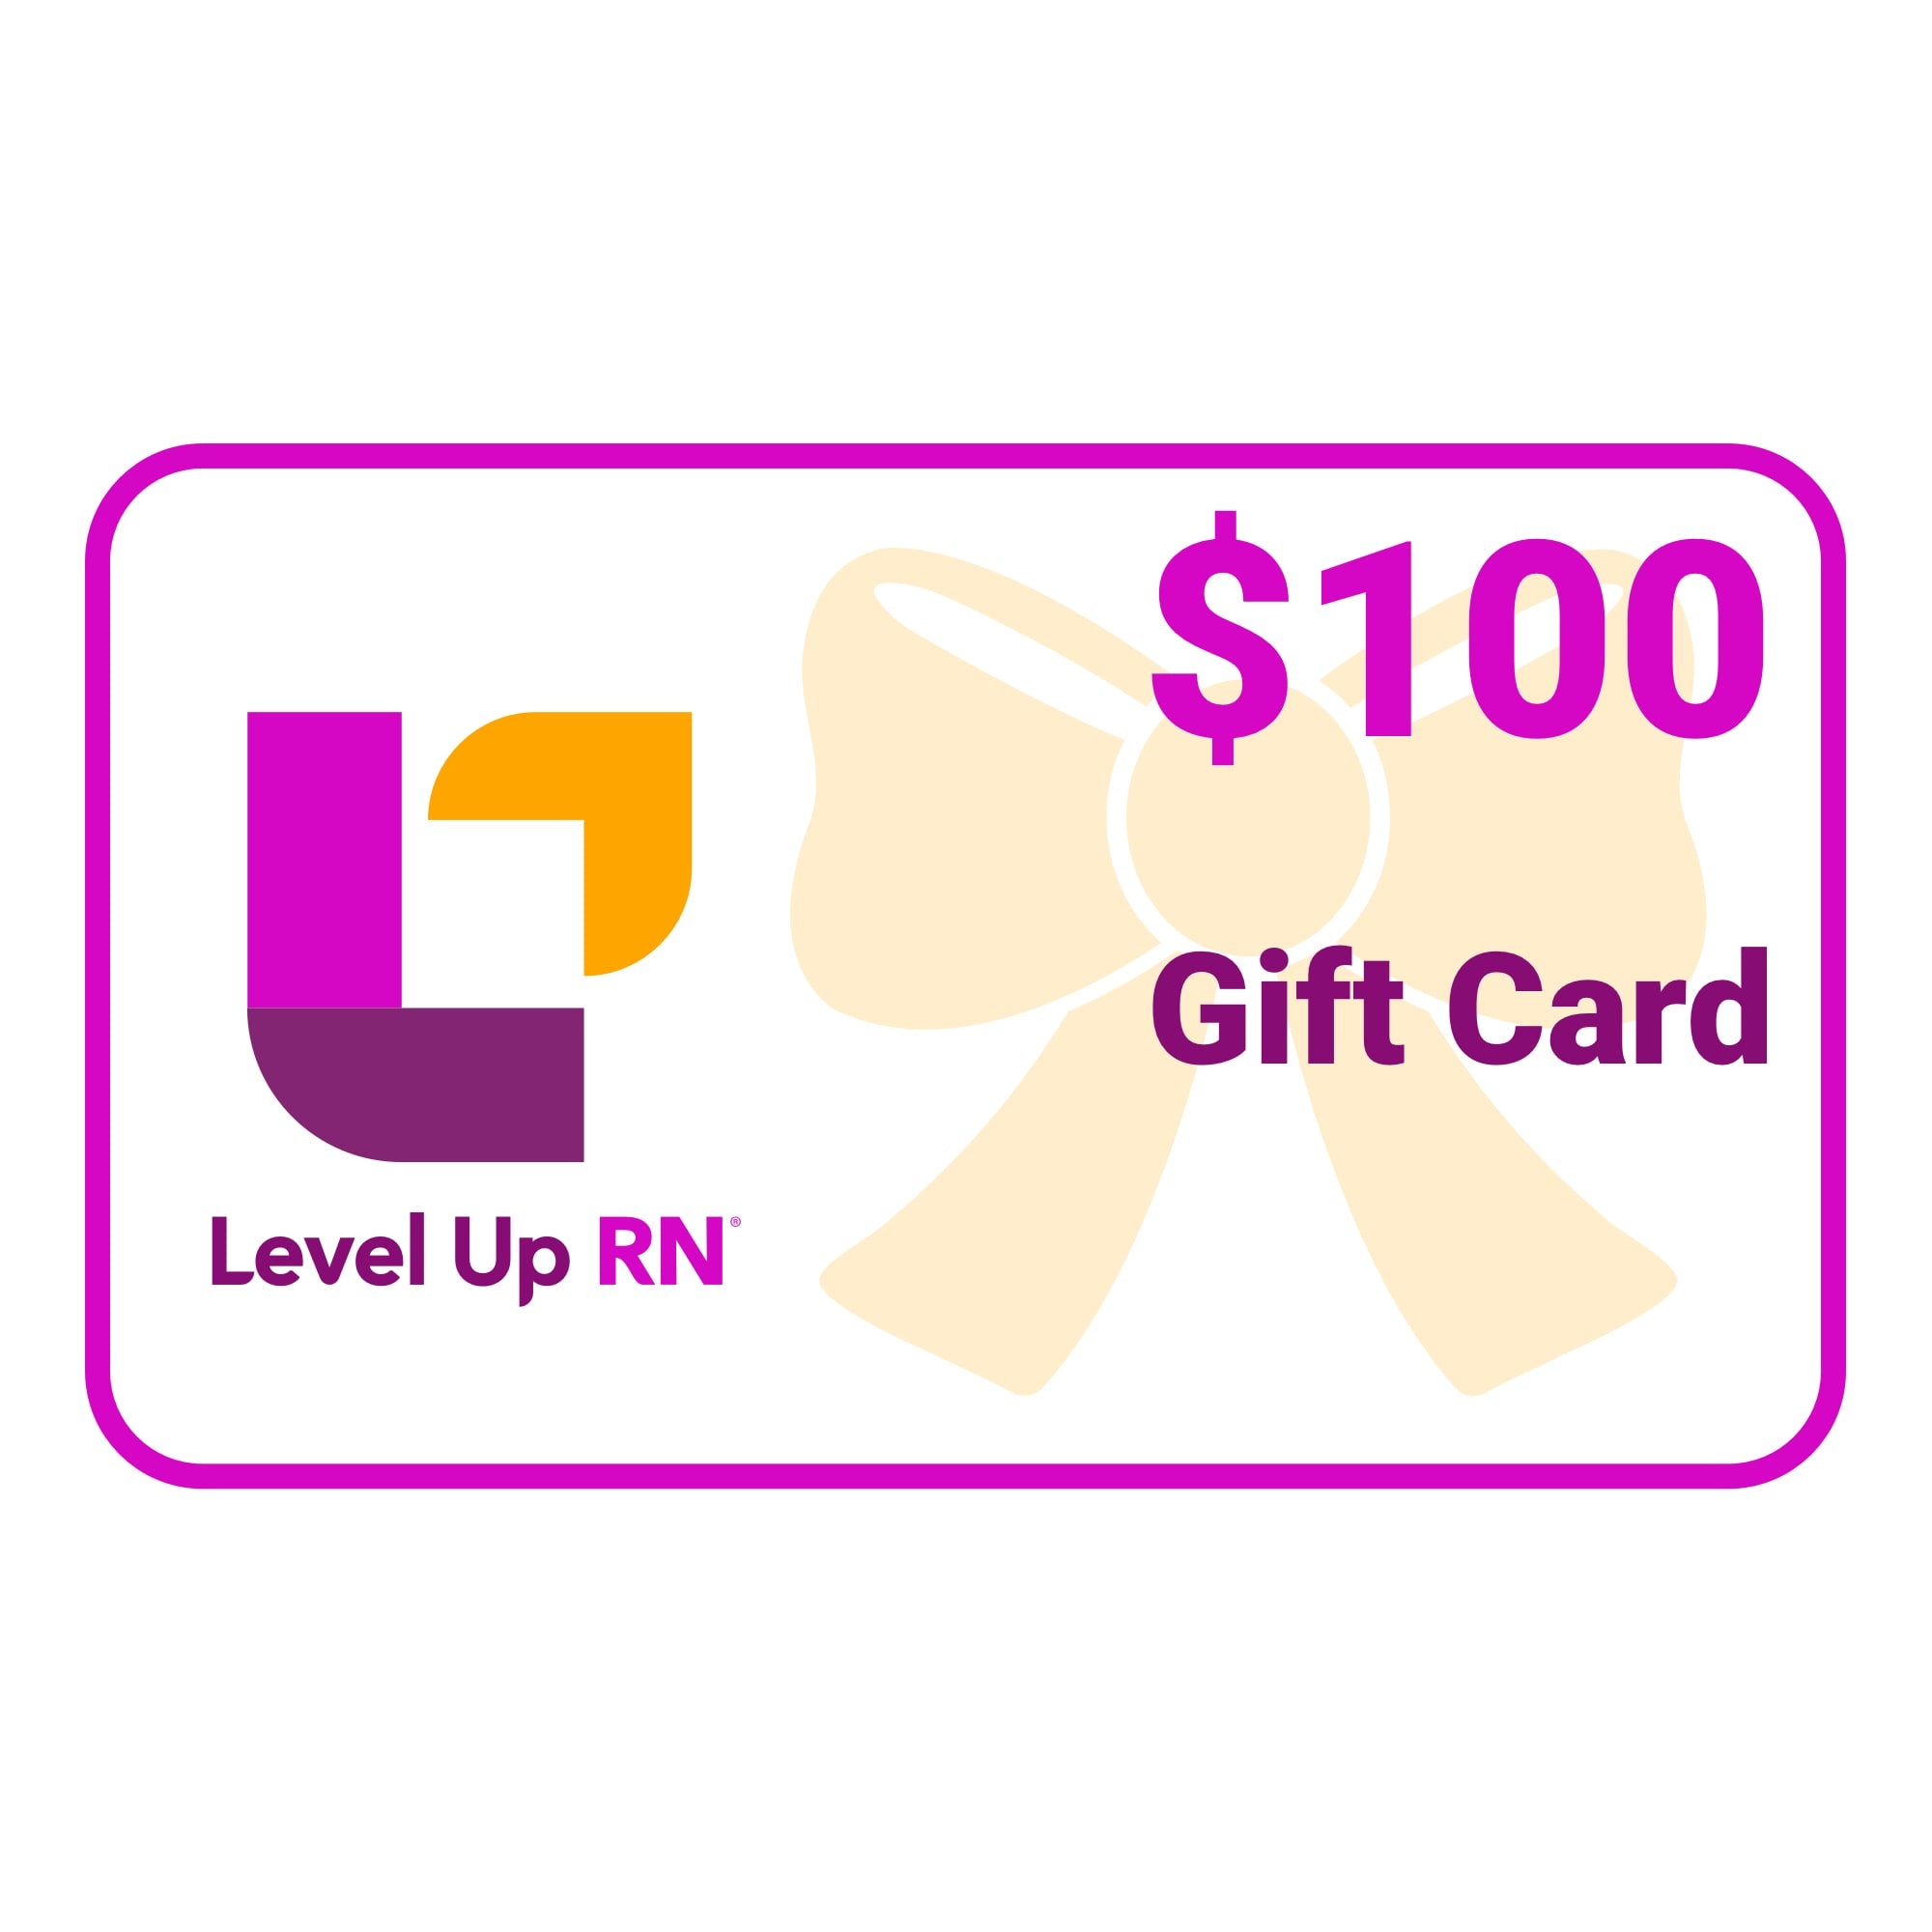 Level Up RN Gift Card - Gift Card - LevelUpRN